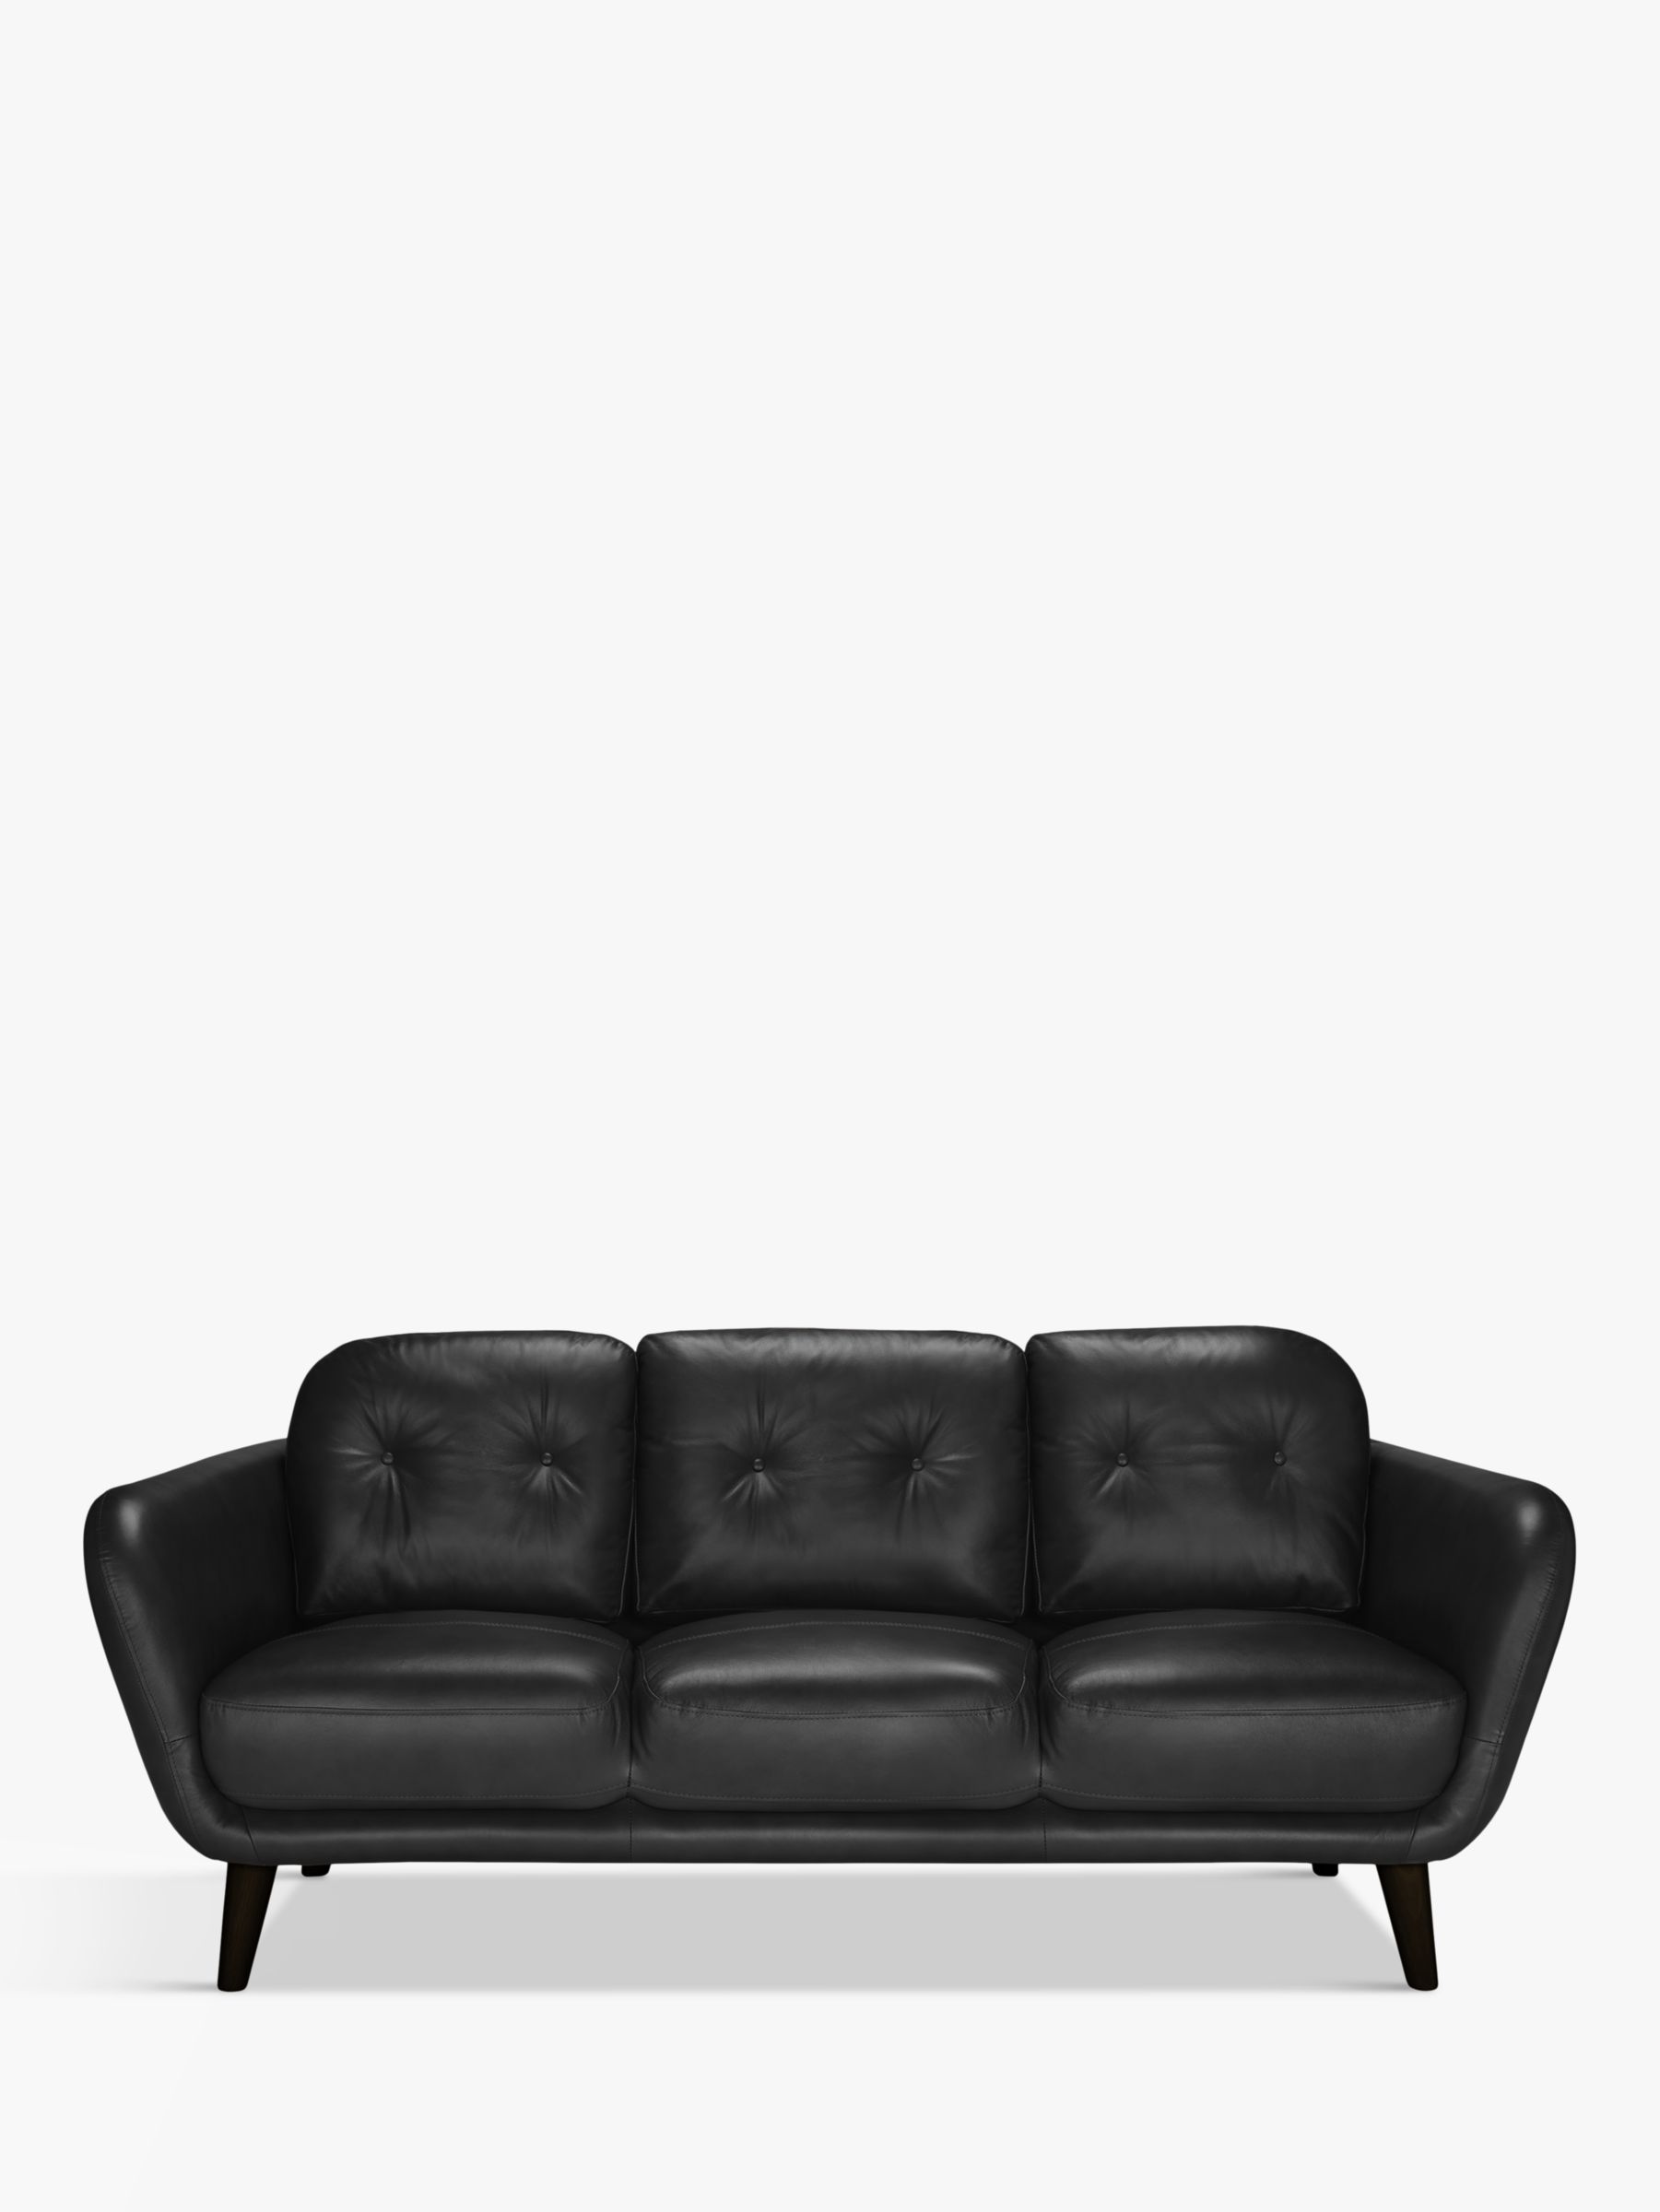 Arlo Range, John Lewis Arlo Leather Large 3 Seater Sofa, Dark Leg, Contempo Black